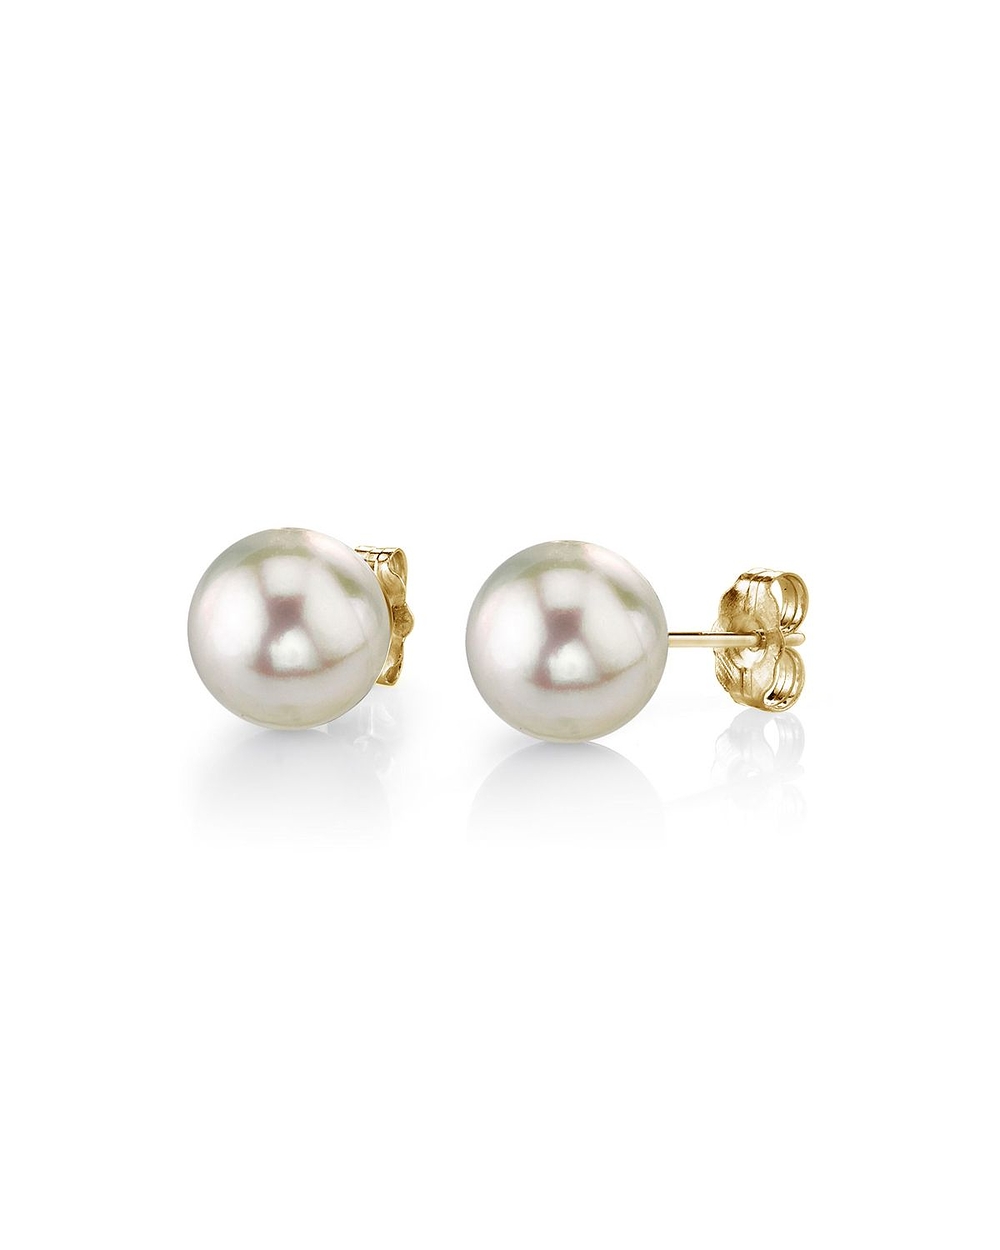 pearl earrings 5.0-5.5mm white akoya pearl stud earrings vthobce